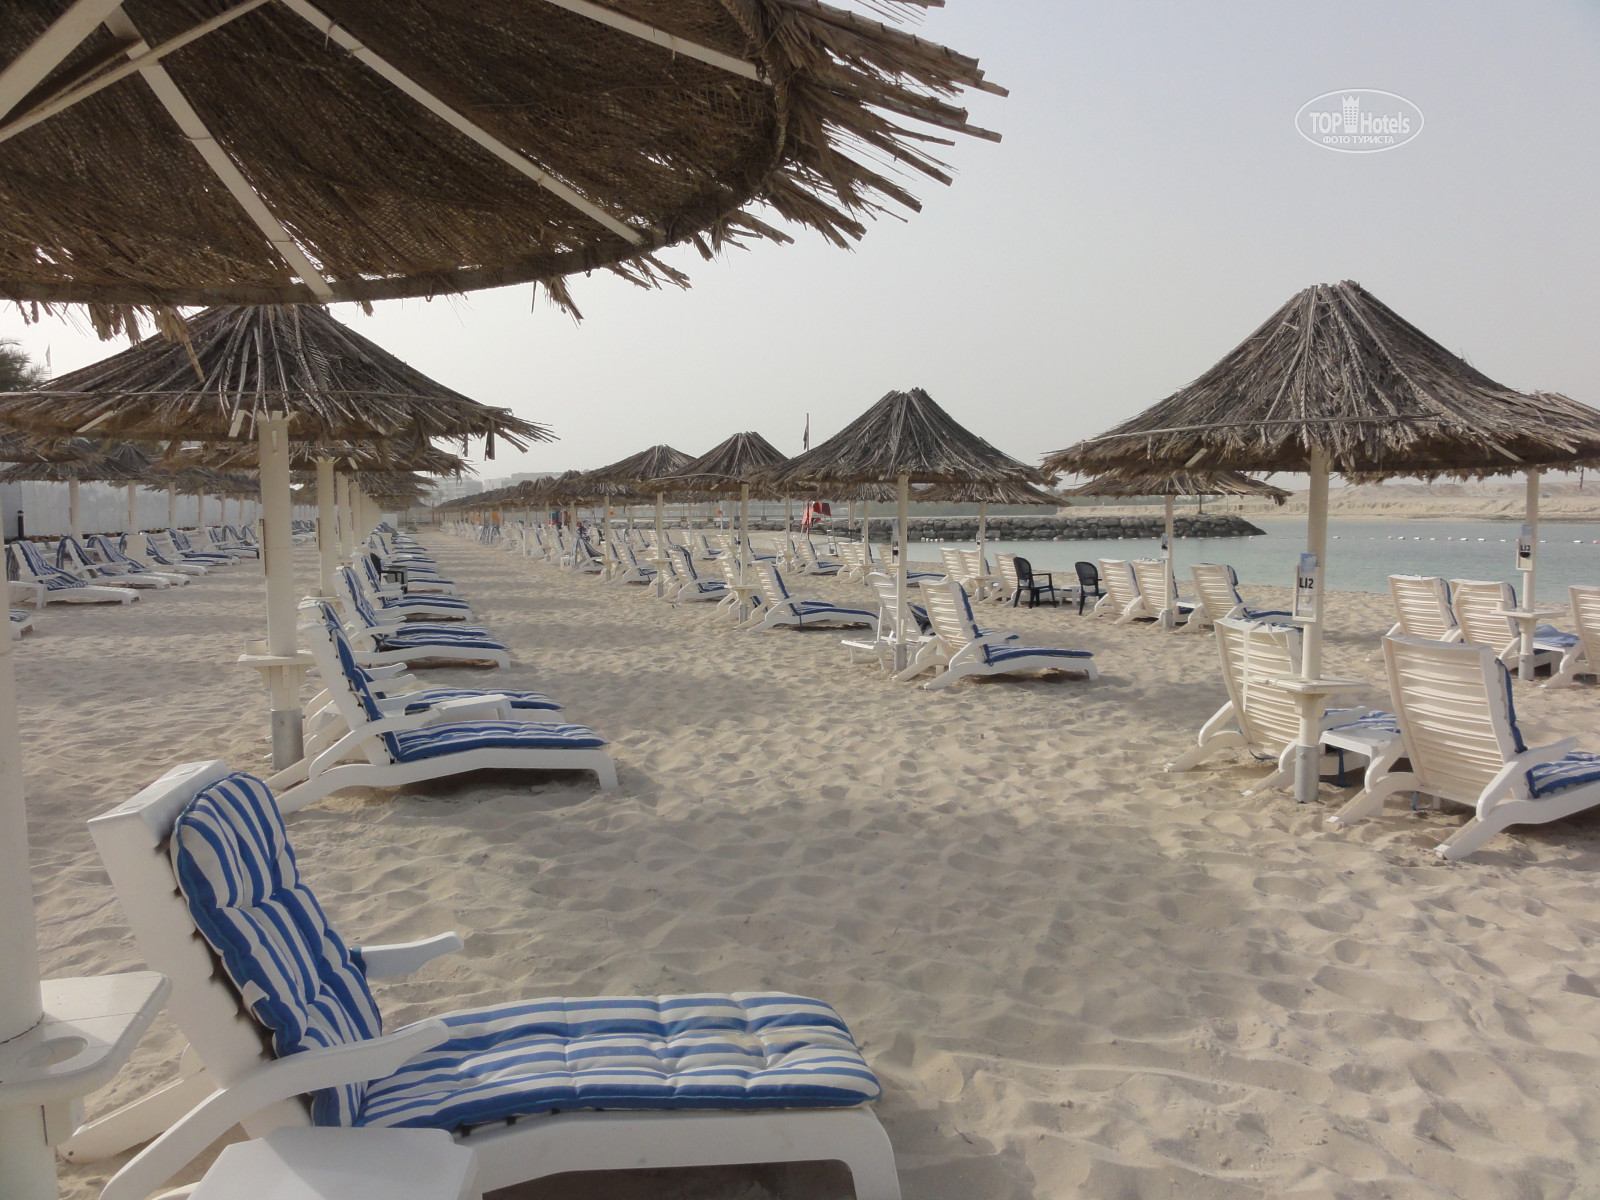 Royal m hotel abu dhabi 5. Интерконтиненталь Абу Даби пляж. Royal m Hotel & Resort Abu Dhabi. Royal m Hotel & Resort Abu Dhabi пляж. Royal m Hotel пляж.